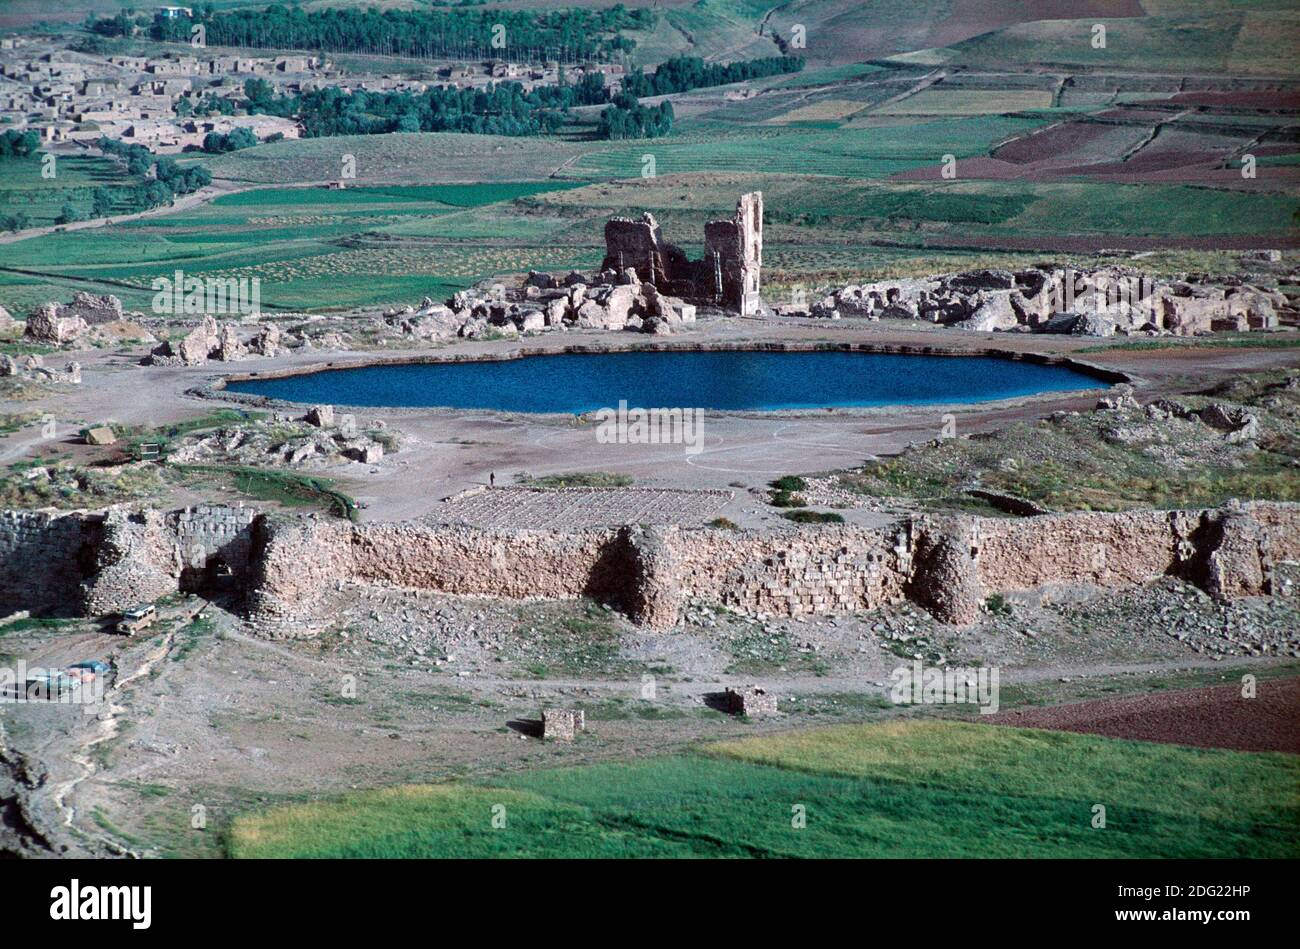 Takht-e Sulaiman, site of Sasanian fire temple and Mongol palace, Azerbaijan province, Iran. Stock Photo